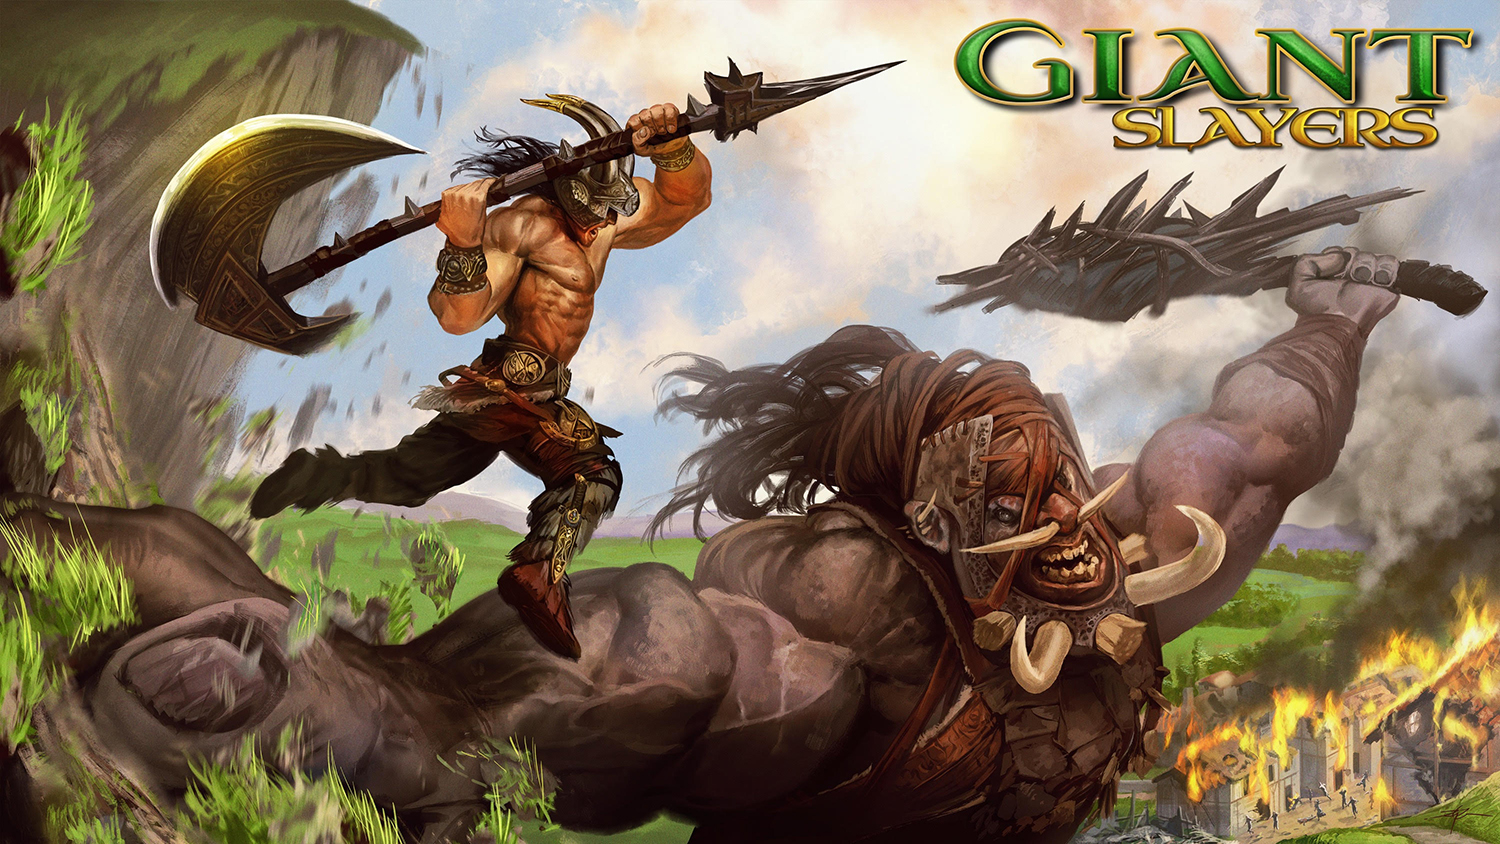 giant slayer slayers crazy girl axe Axeman warrior catapult hook.